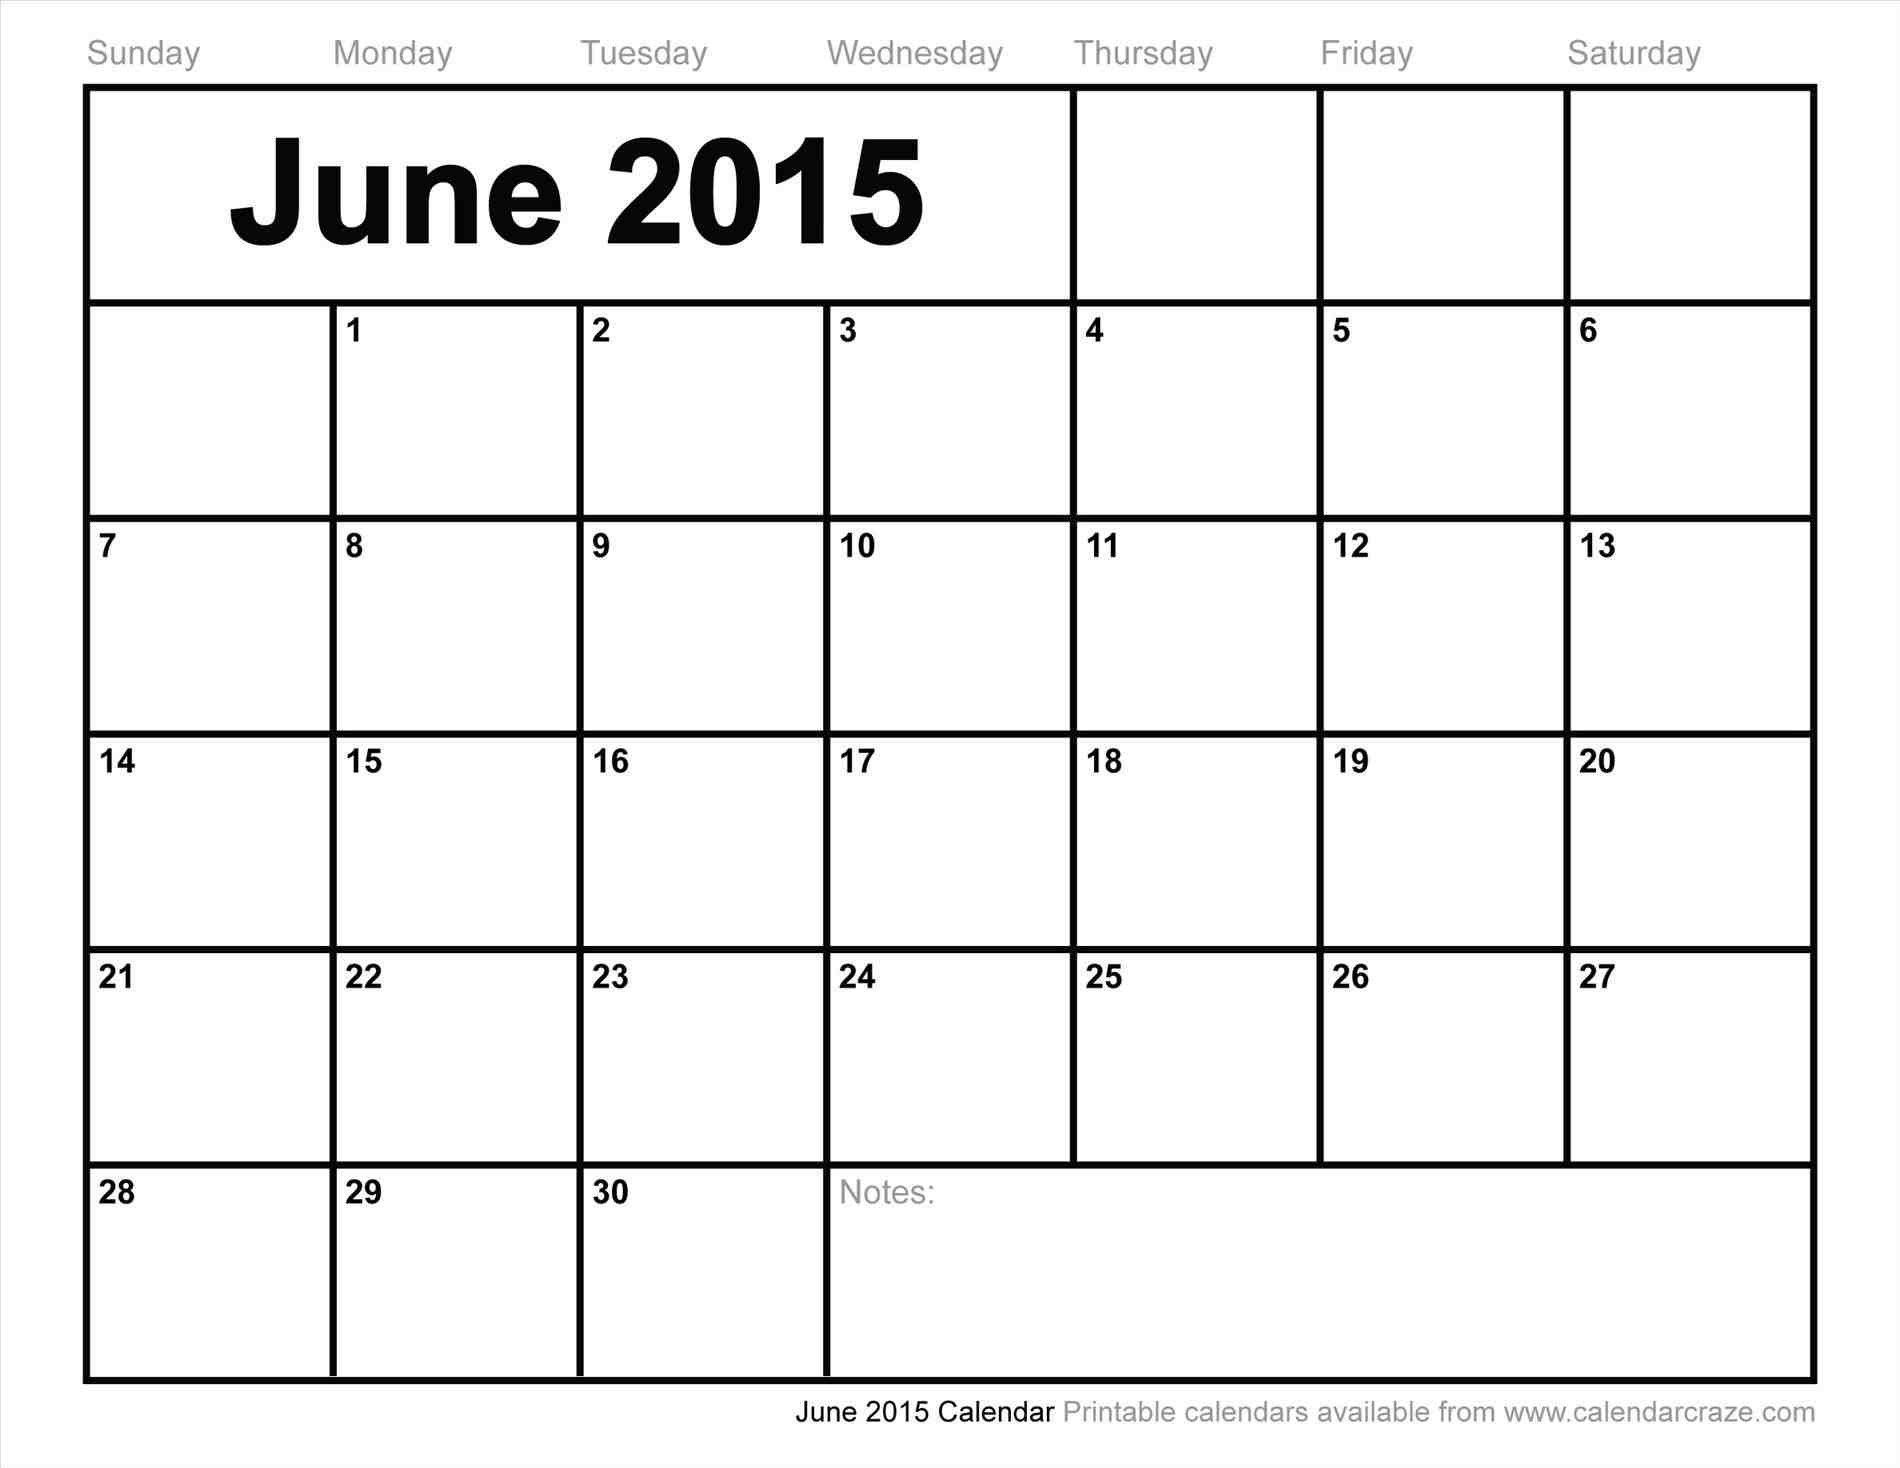 The Cool Year Connieus Bulletin Board Calendar Template File